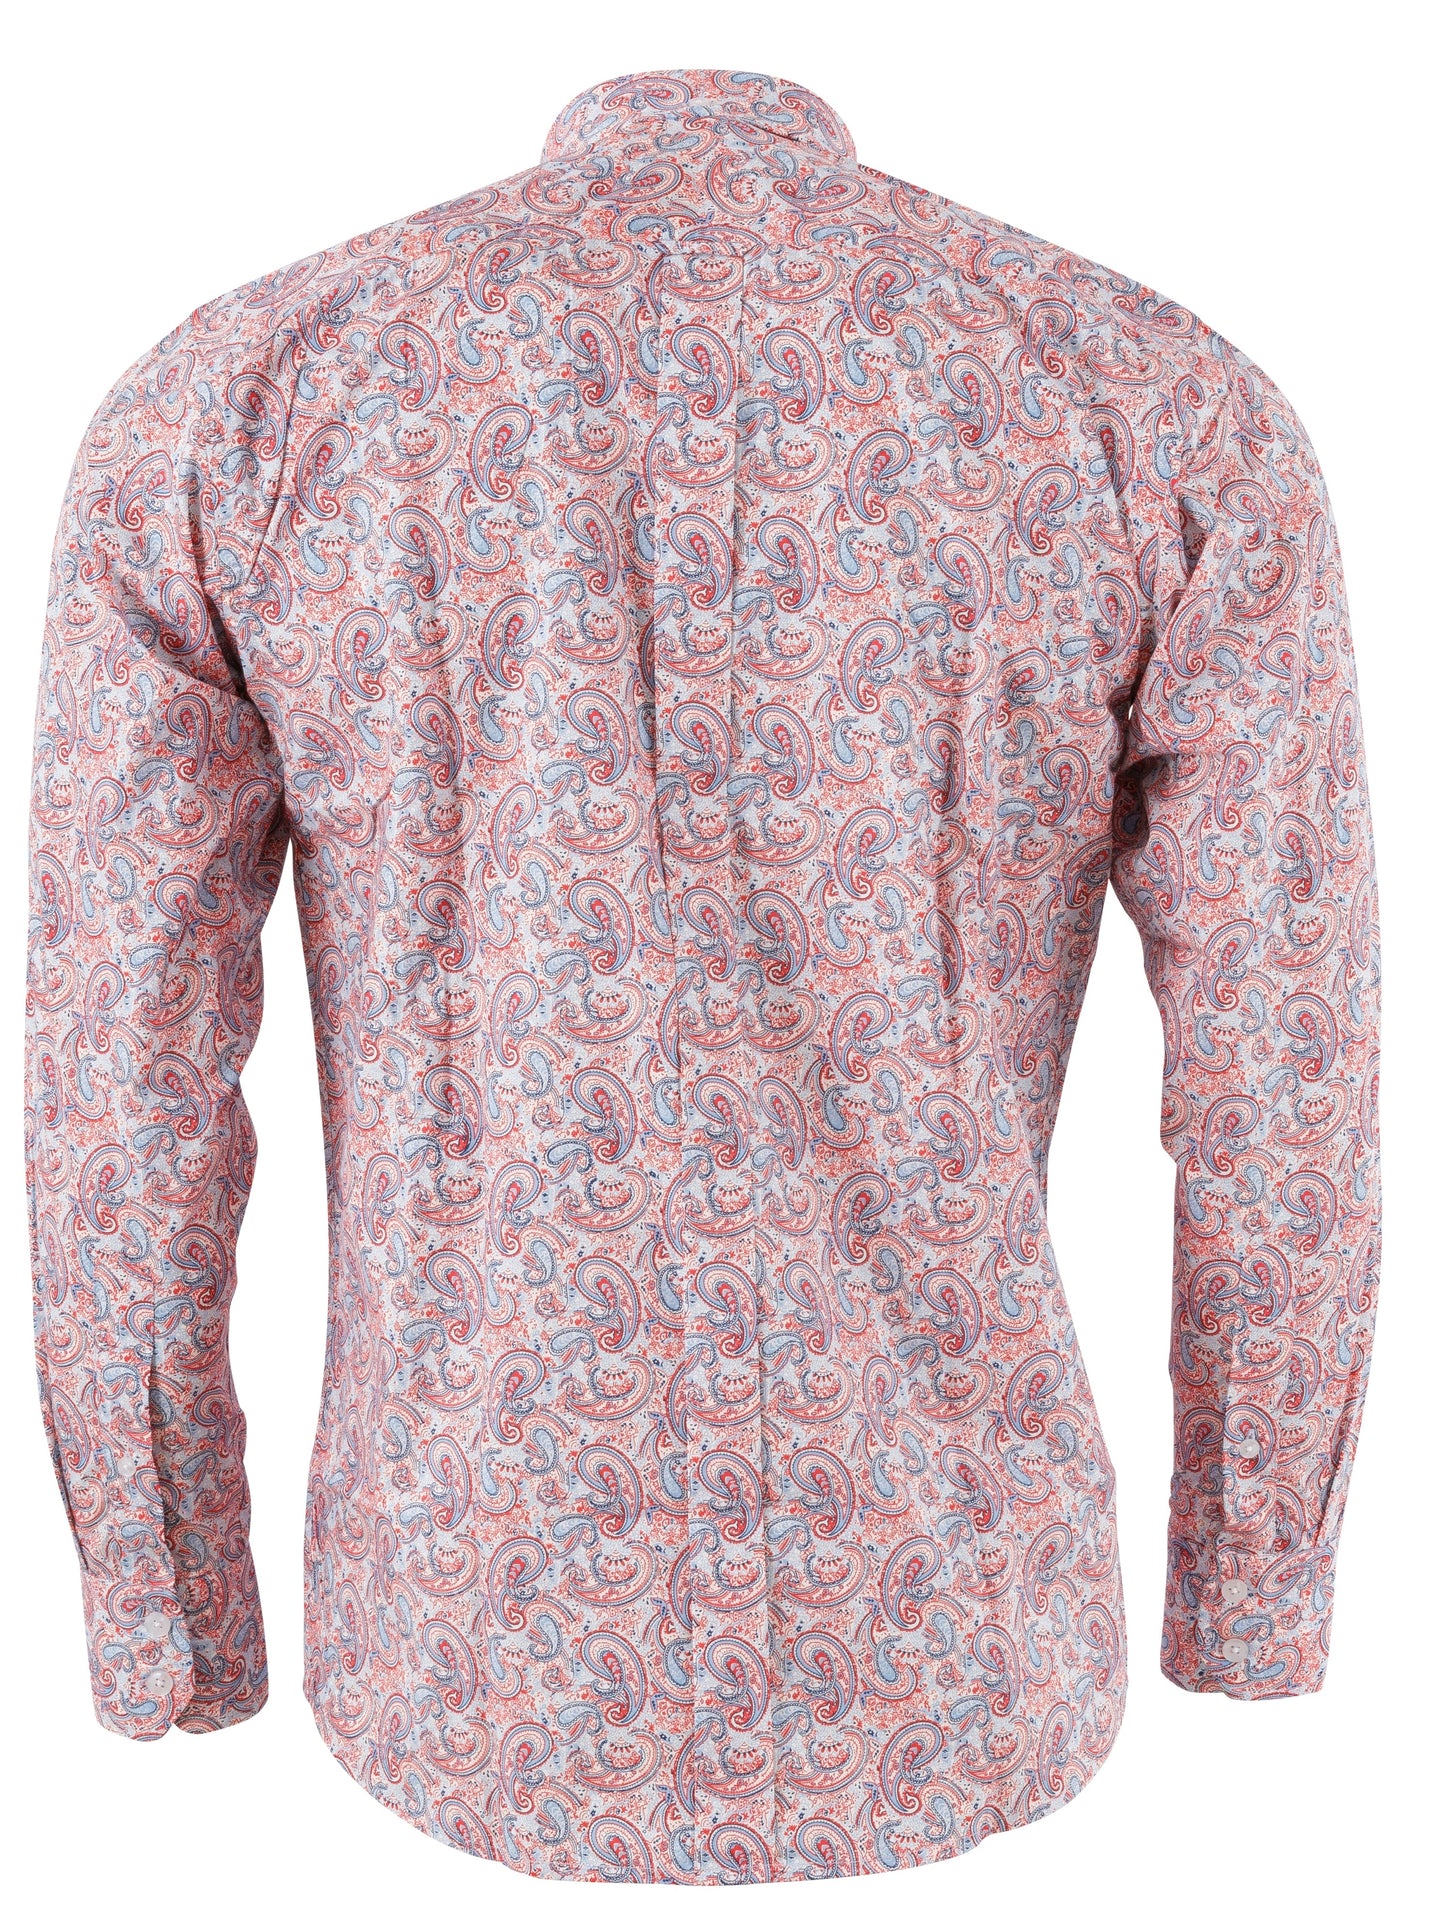 Camisa con botones mod retro de manga larga de paisley roja Relco para hombre